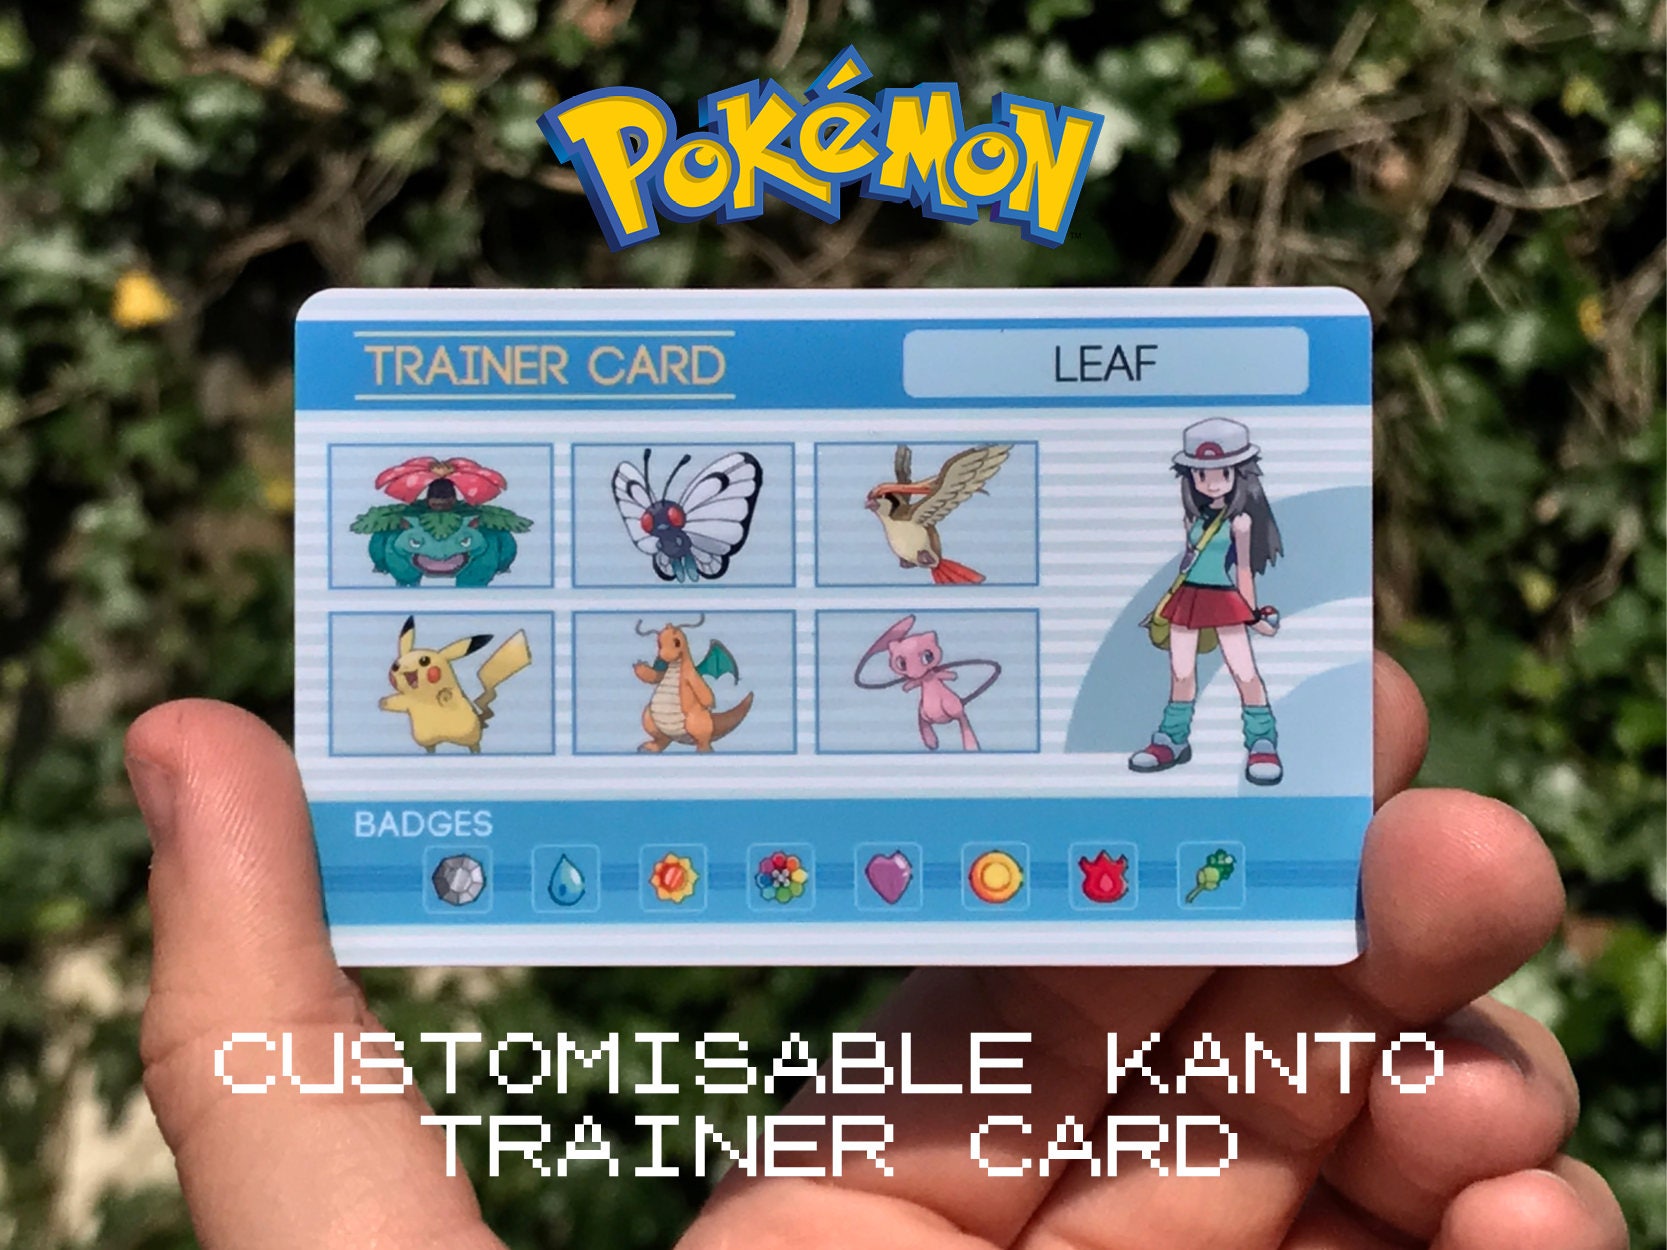 Flareon v custom pokemon card zabatv from zaba.tv trainer x wants to battle...